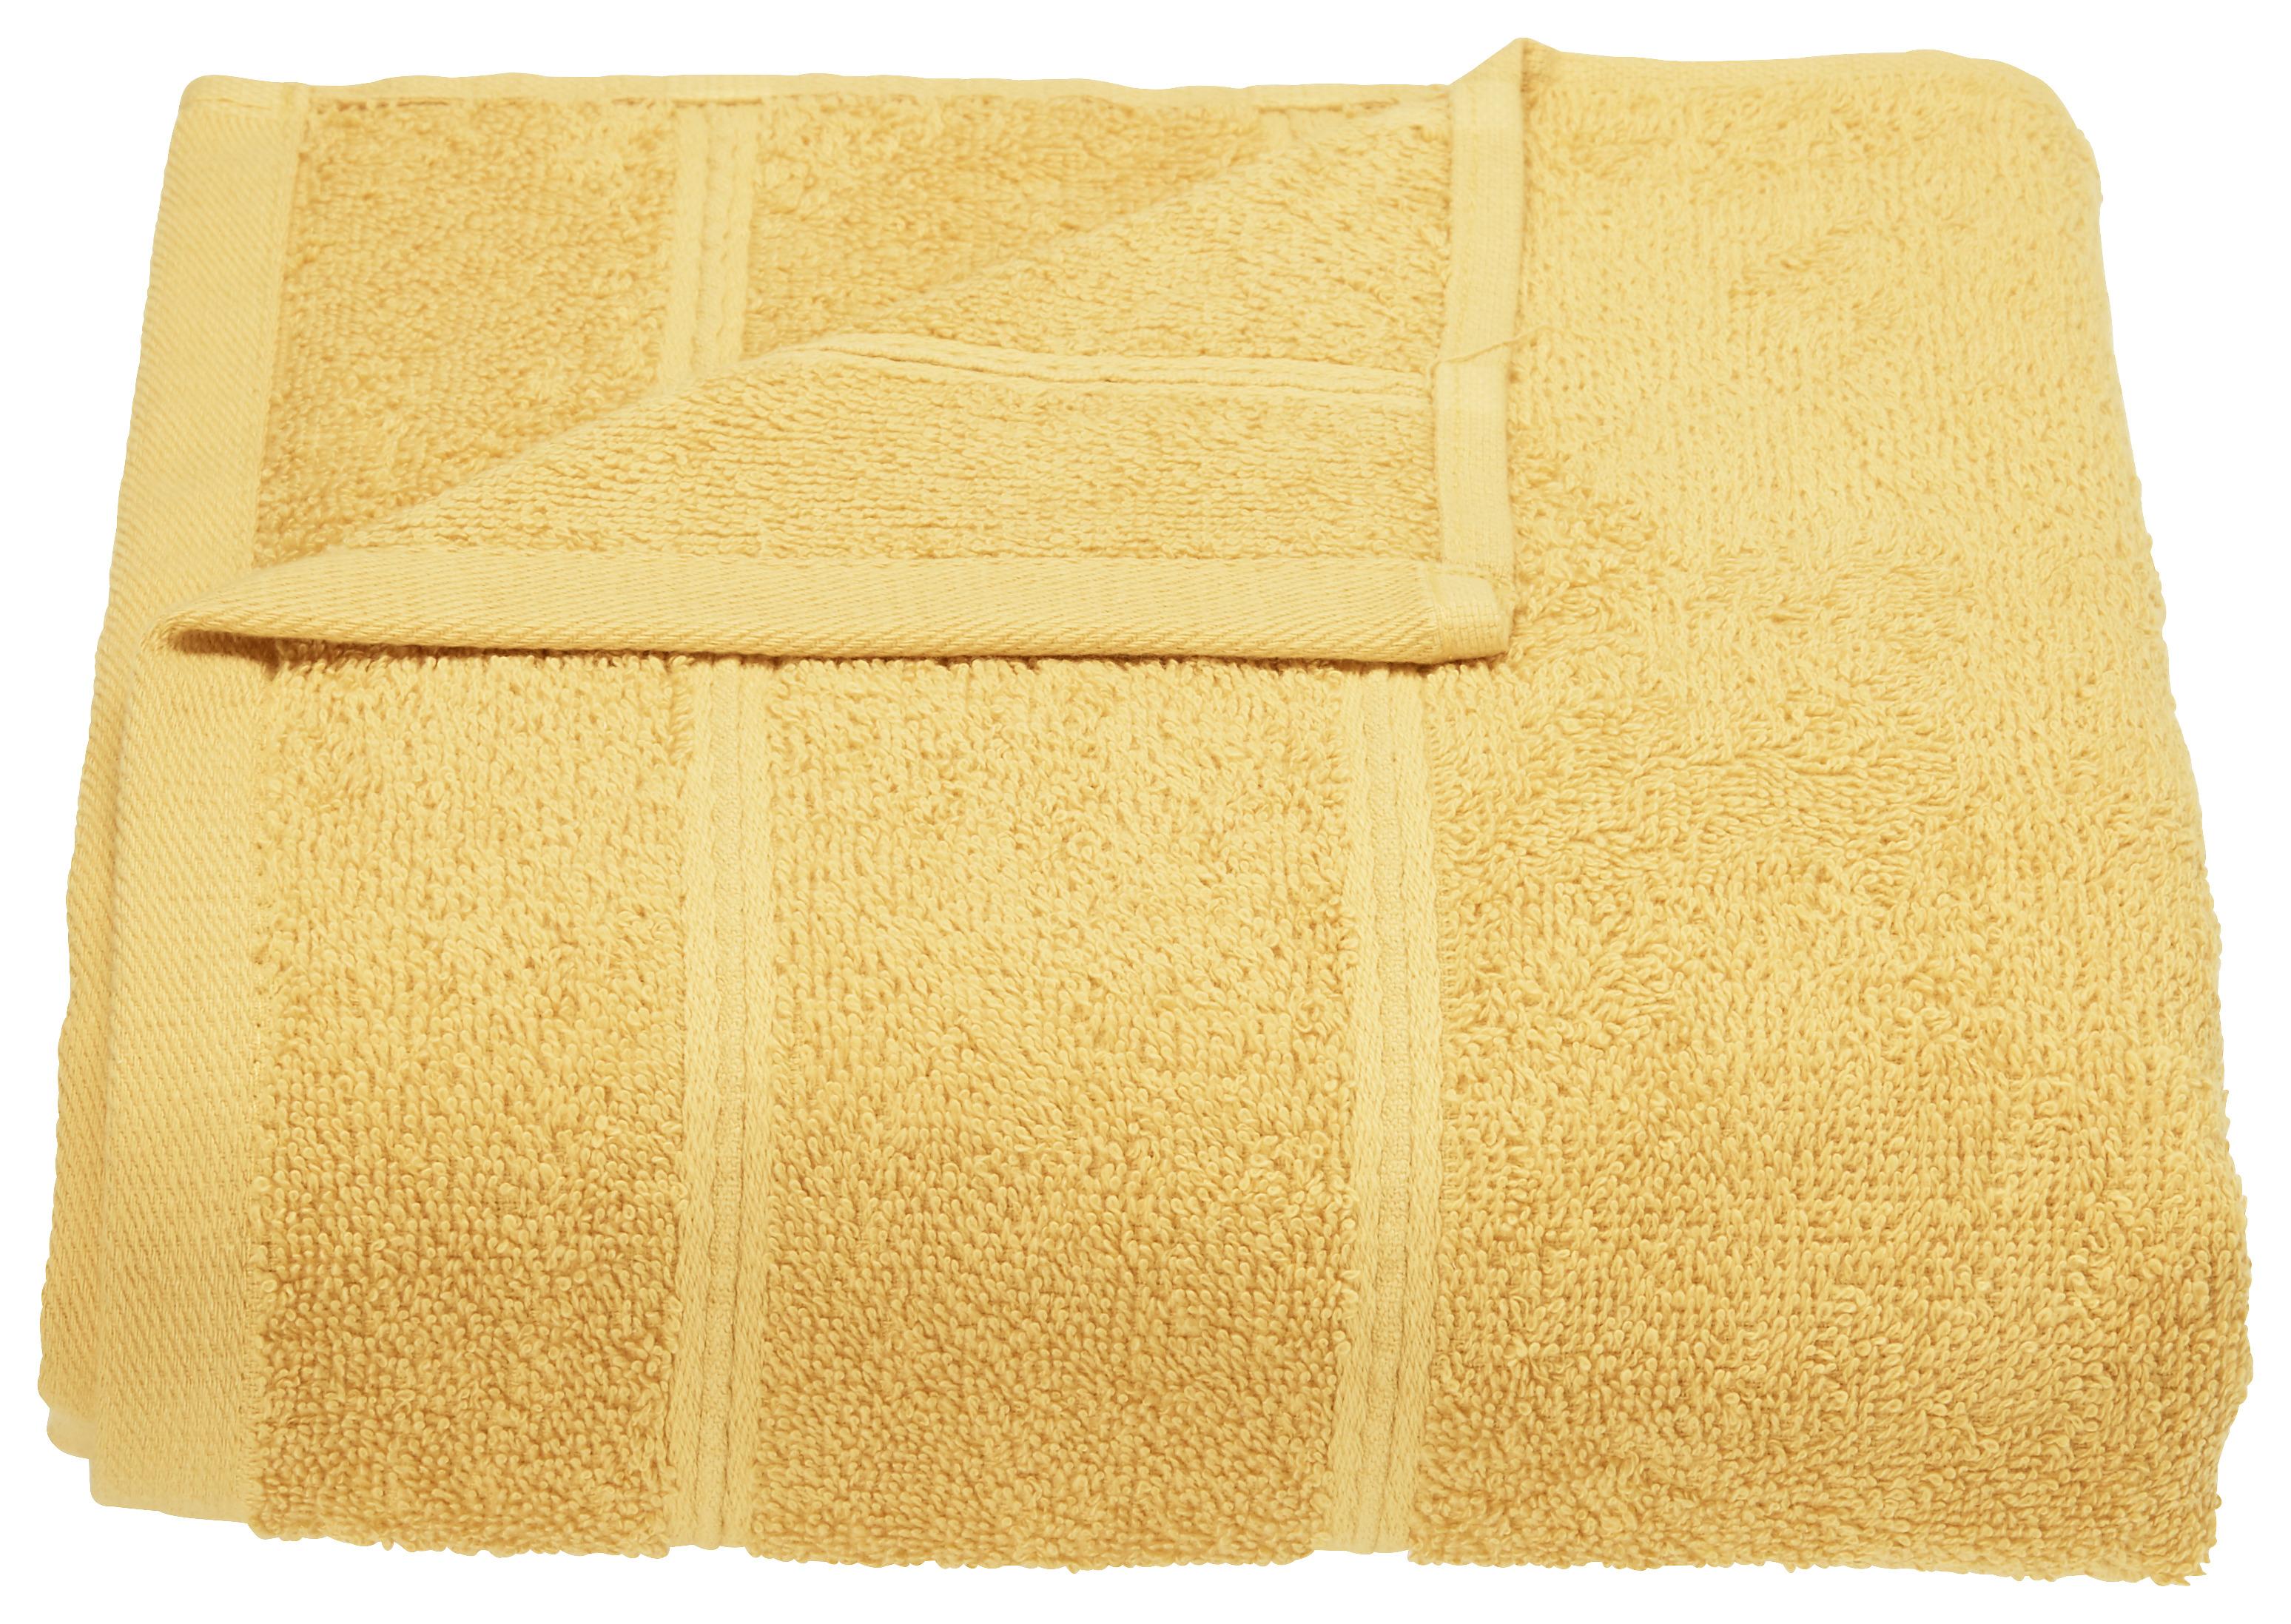 Handtuch Melanie in Gelb ca. 50x100cm - Gelb, Textil (50/100cm) - Modern Living